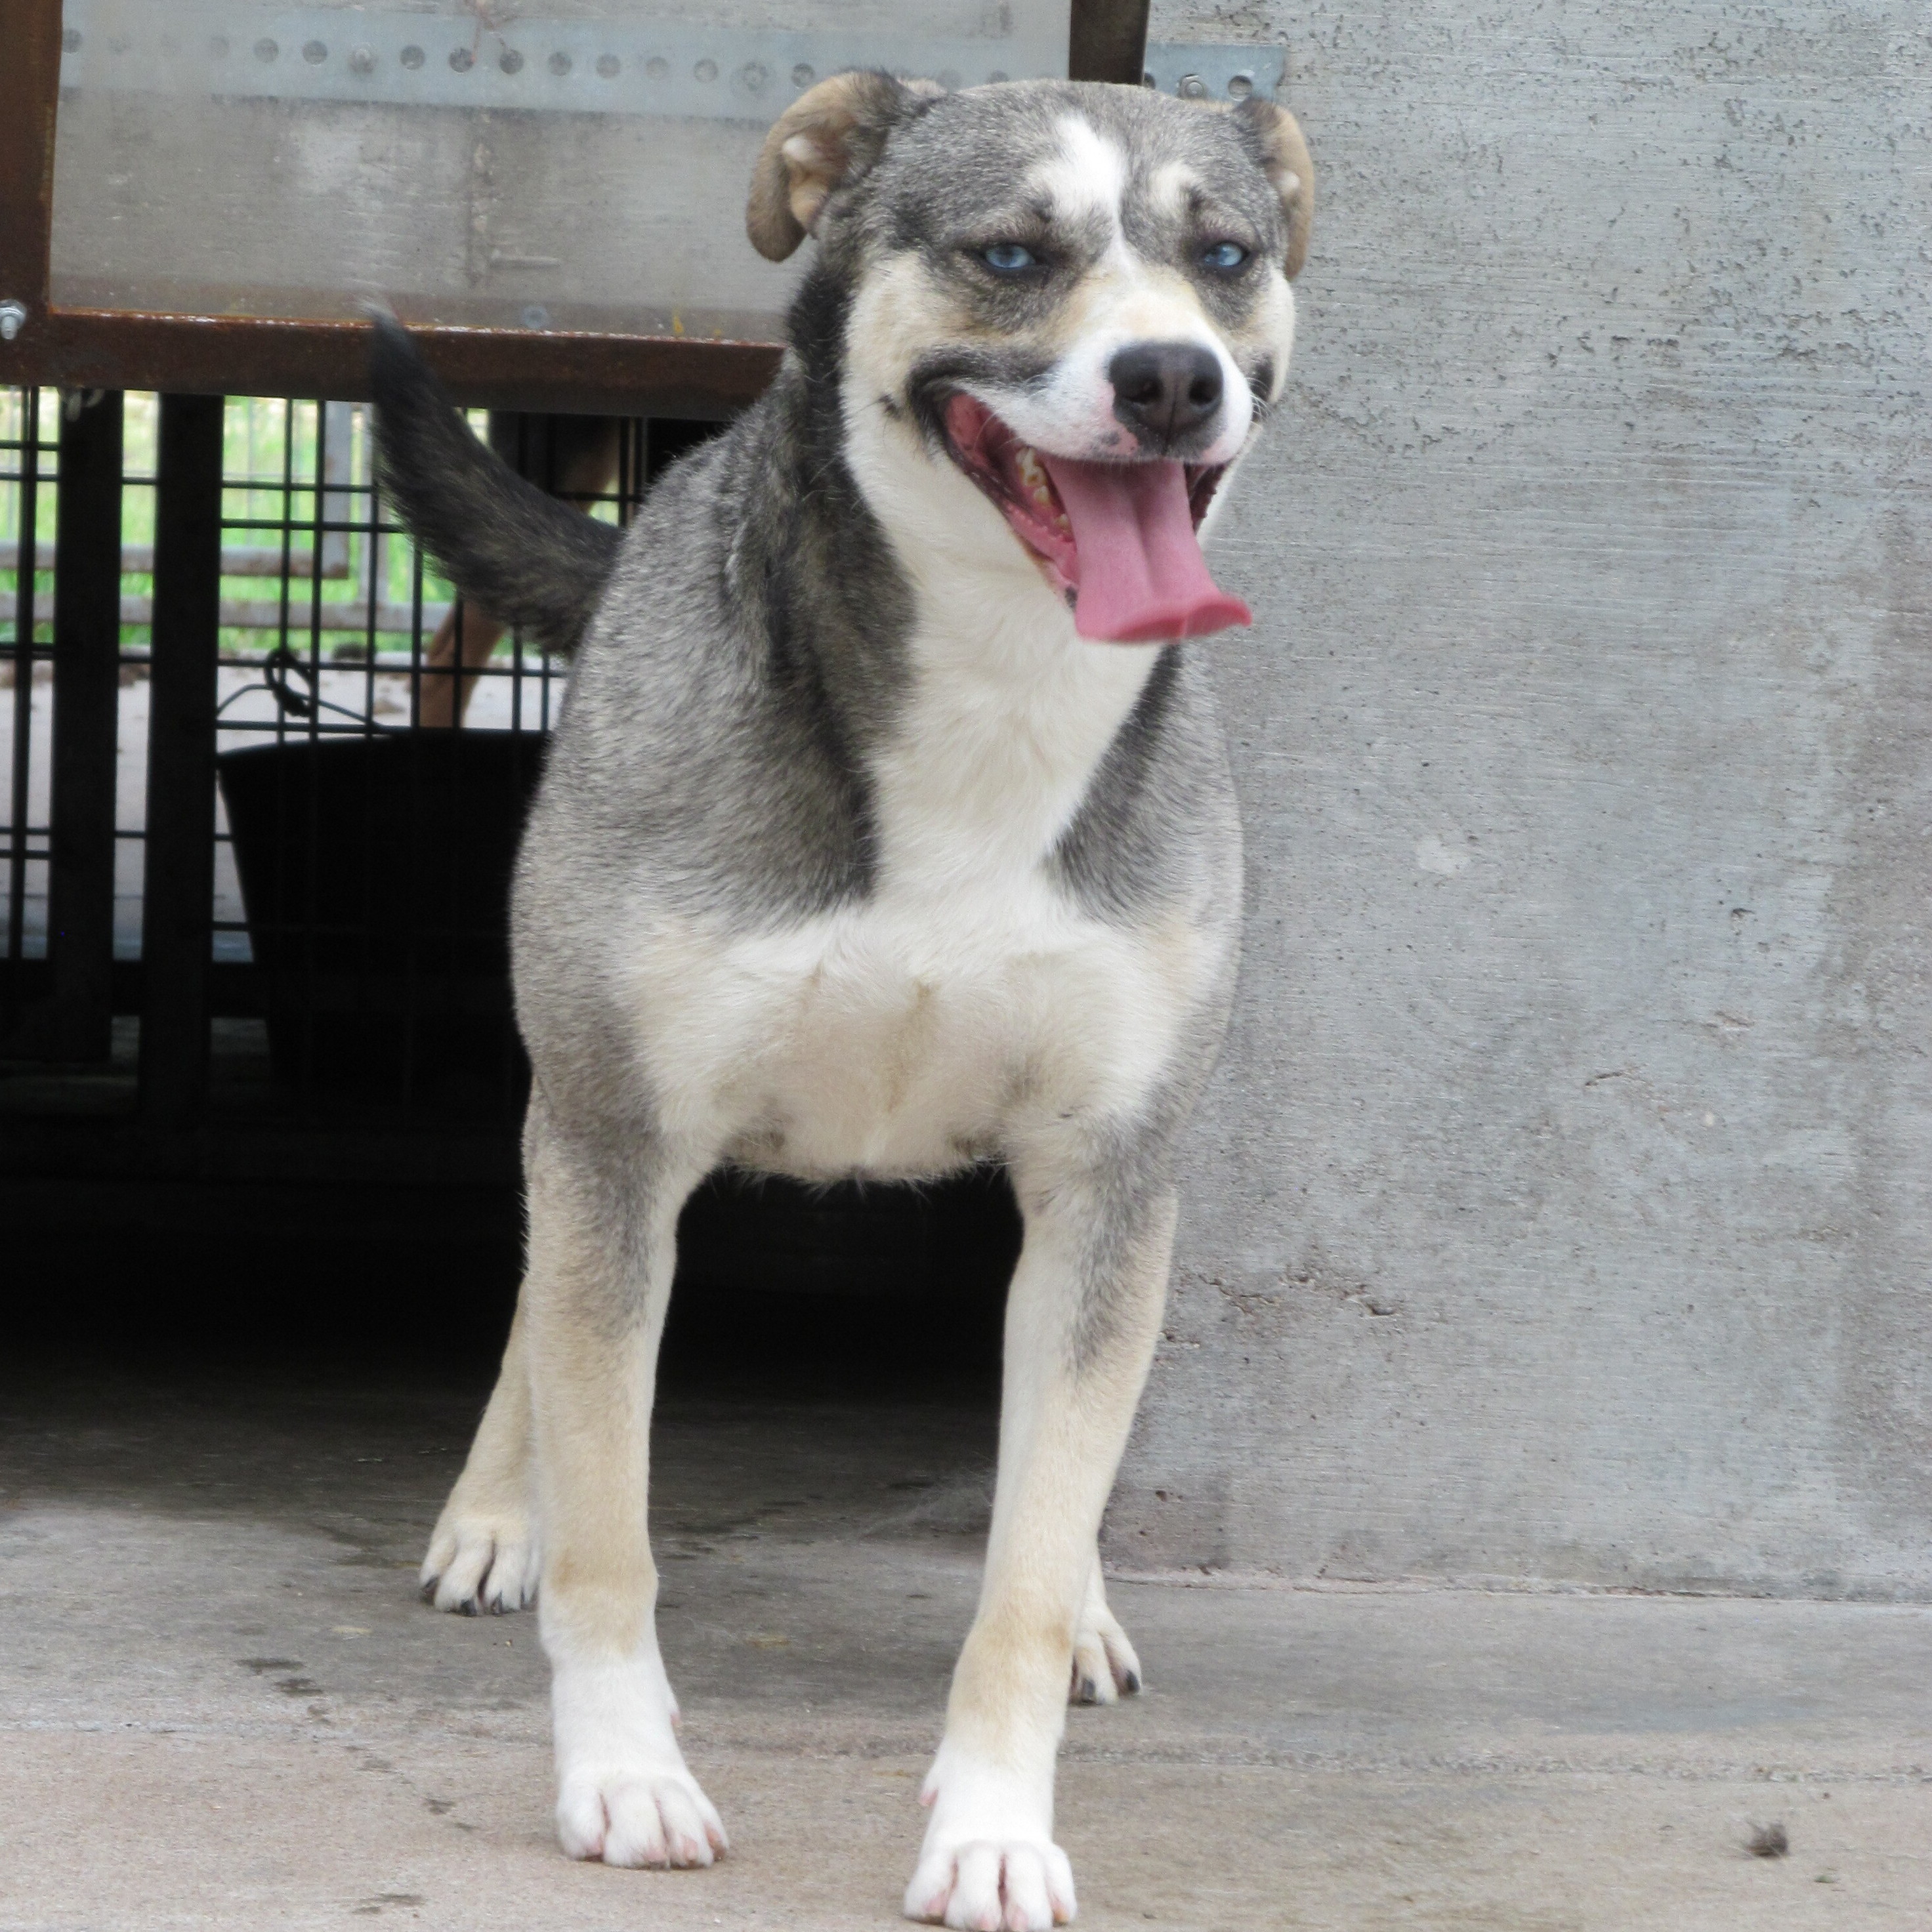 Beauty, an adoptable Husky in Yates Center, KS, 66783 | Photo Image 1